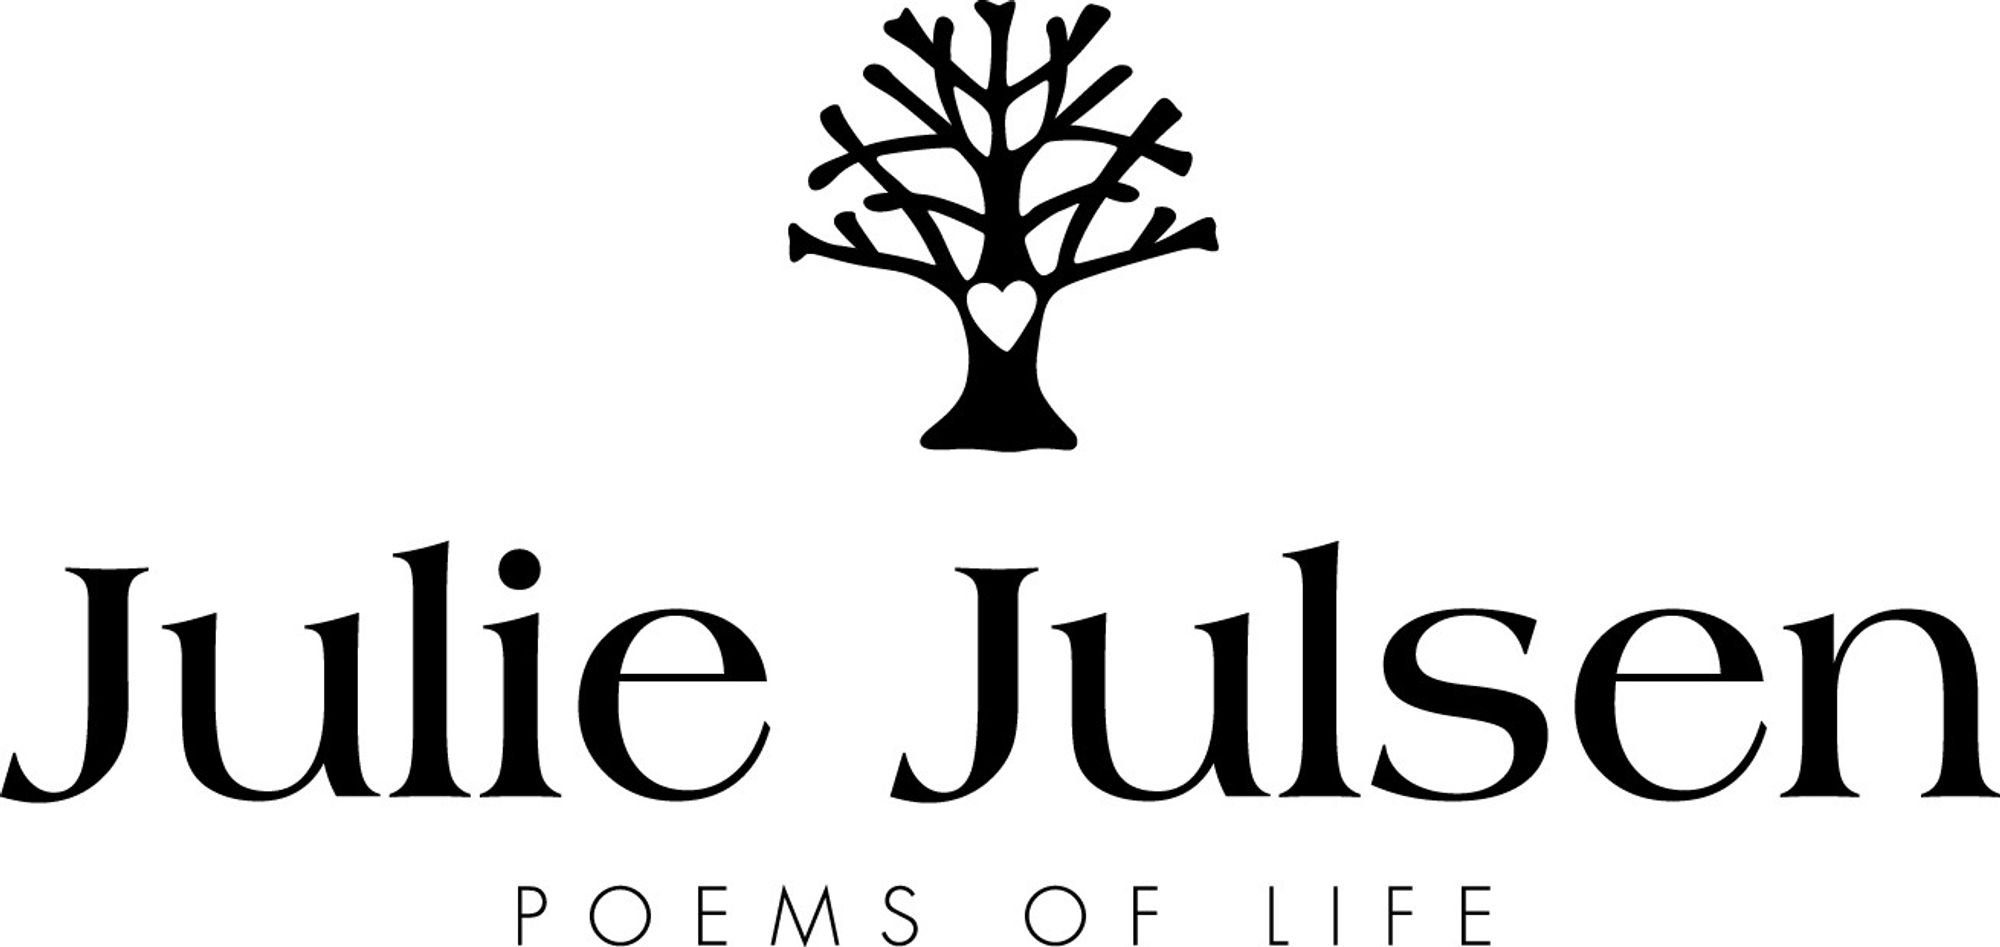 Julie JJC045RG Silberkette Julsen